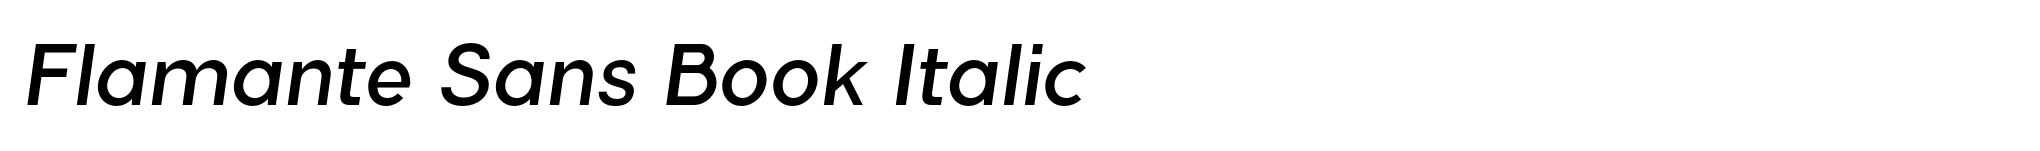 Flamante Sans Book Italic image